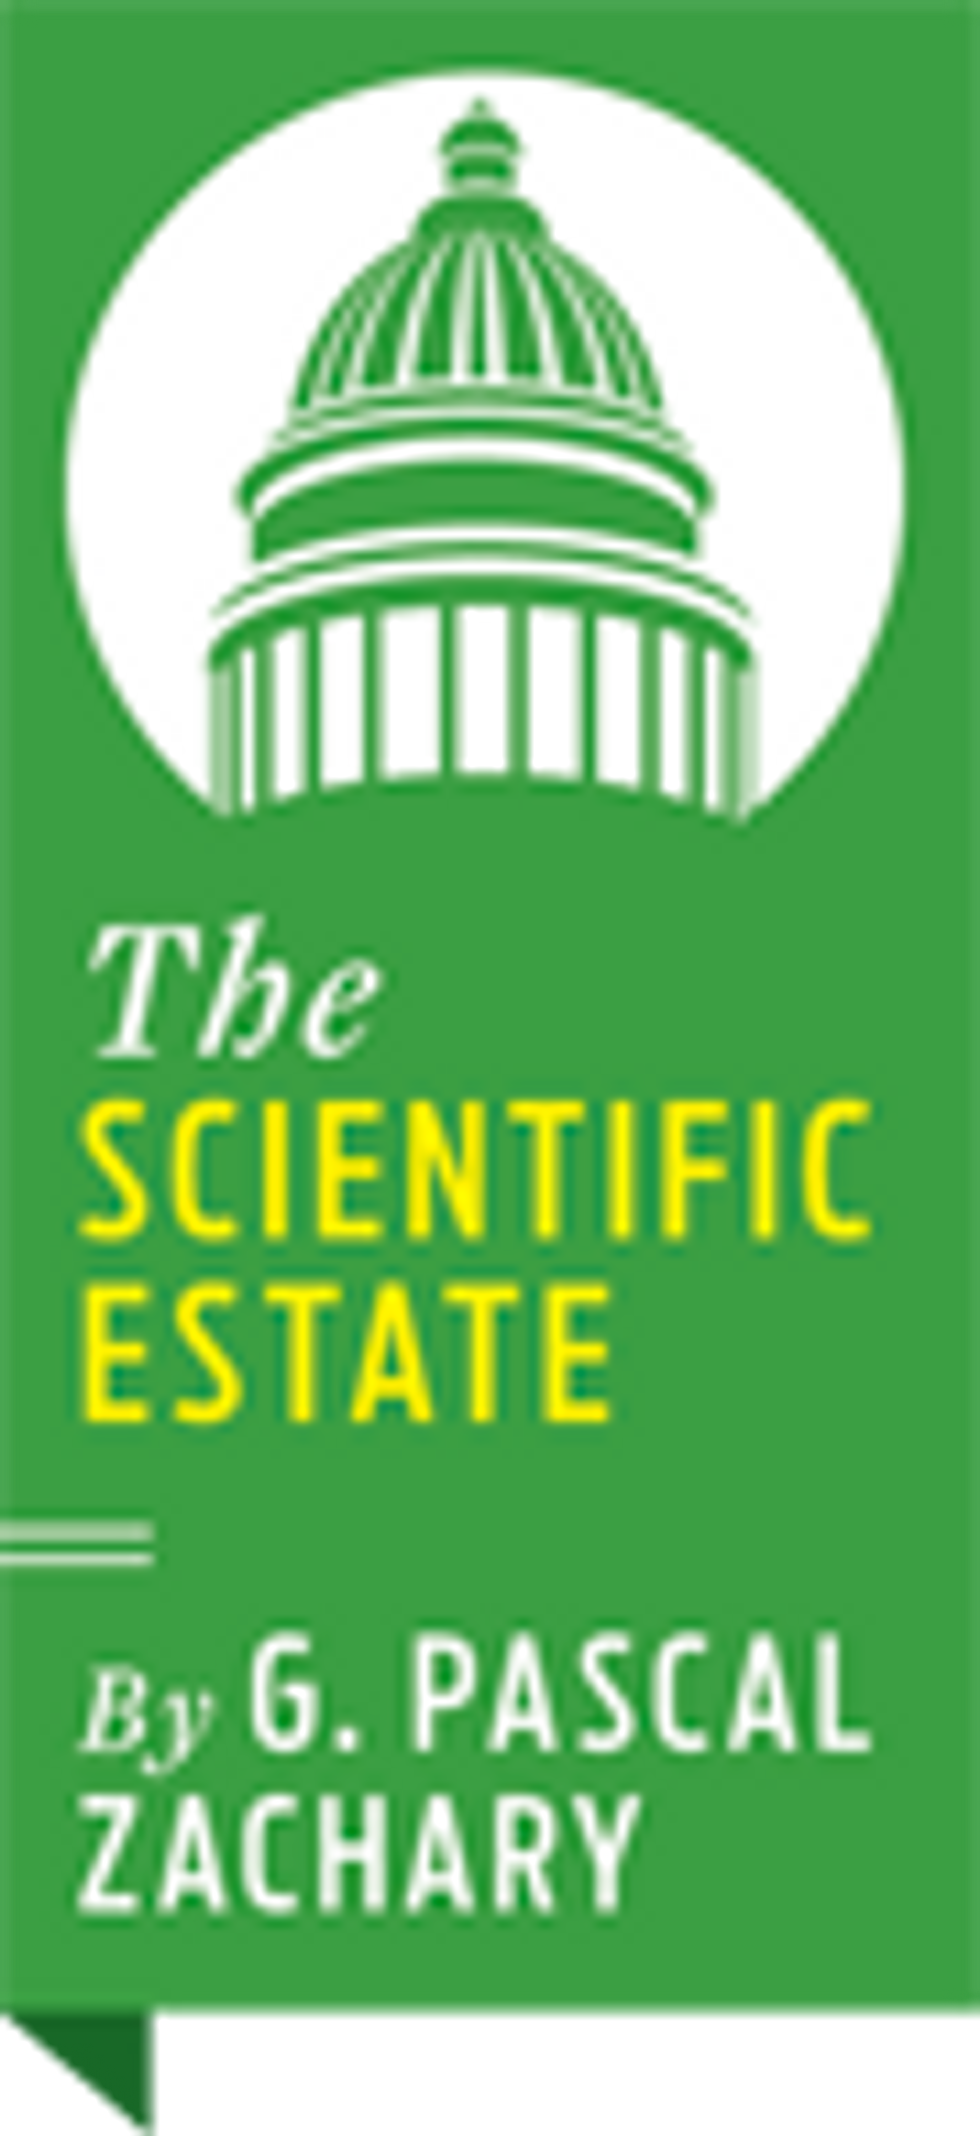 the scientific estate logo